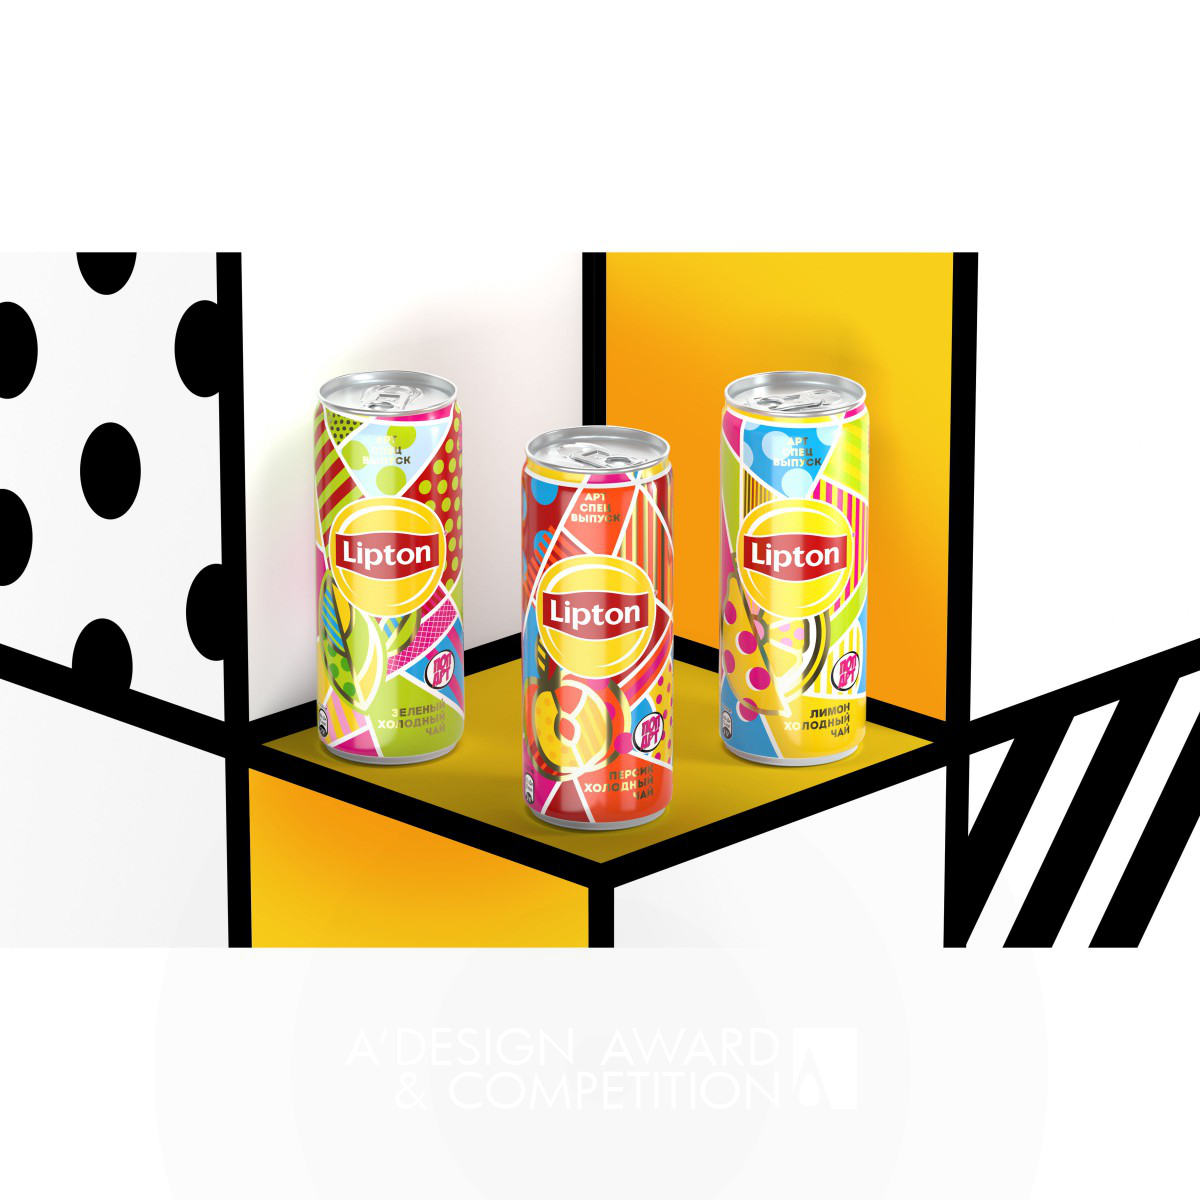 Lipton Pop Art Special Edition Beverage by PepsiCo Design & Innovation